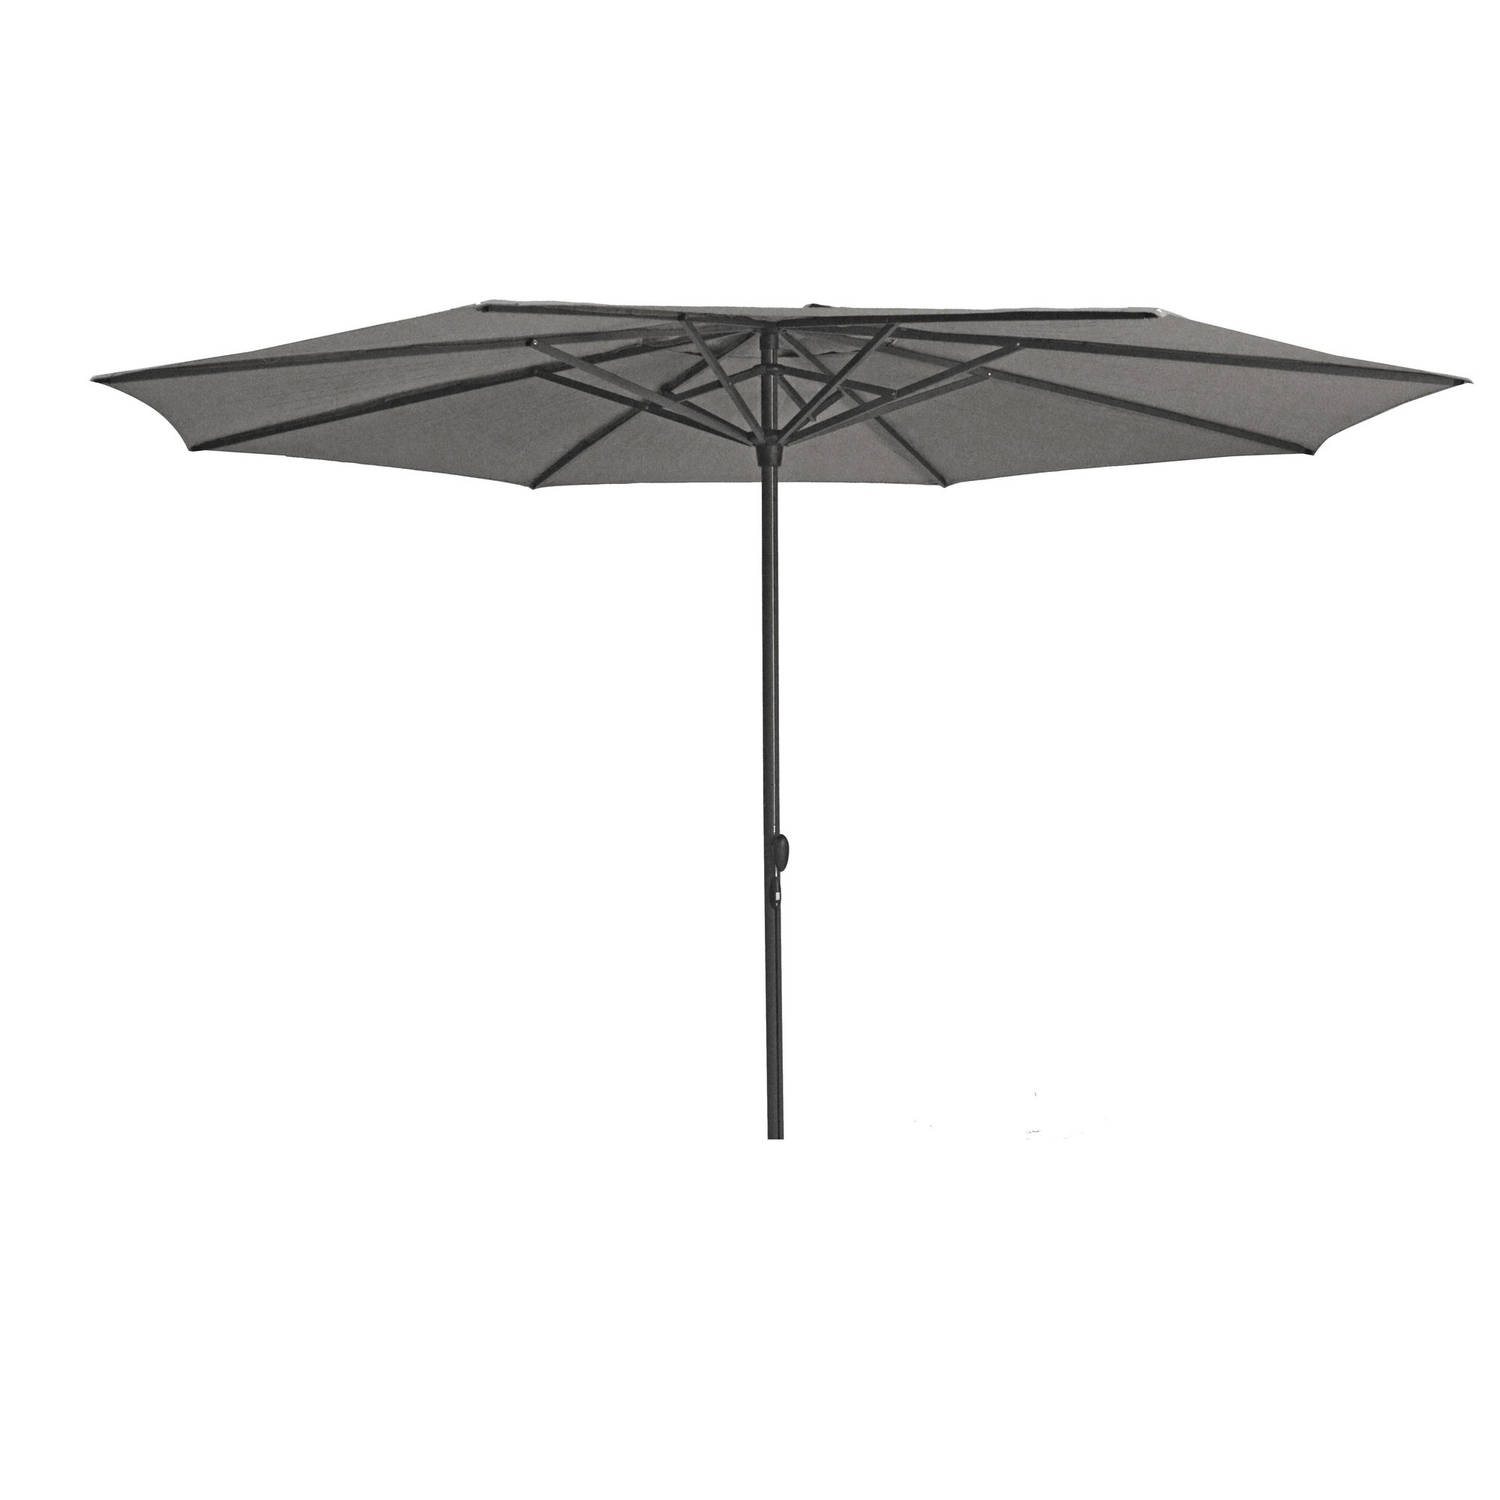 Stokparasol Sintra parasol dia 330 cm donkergrijs aanbieding